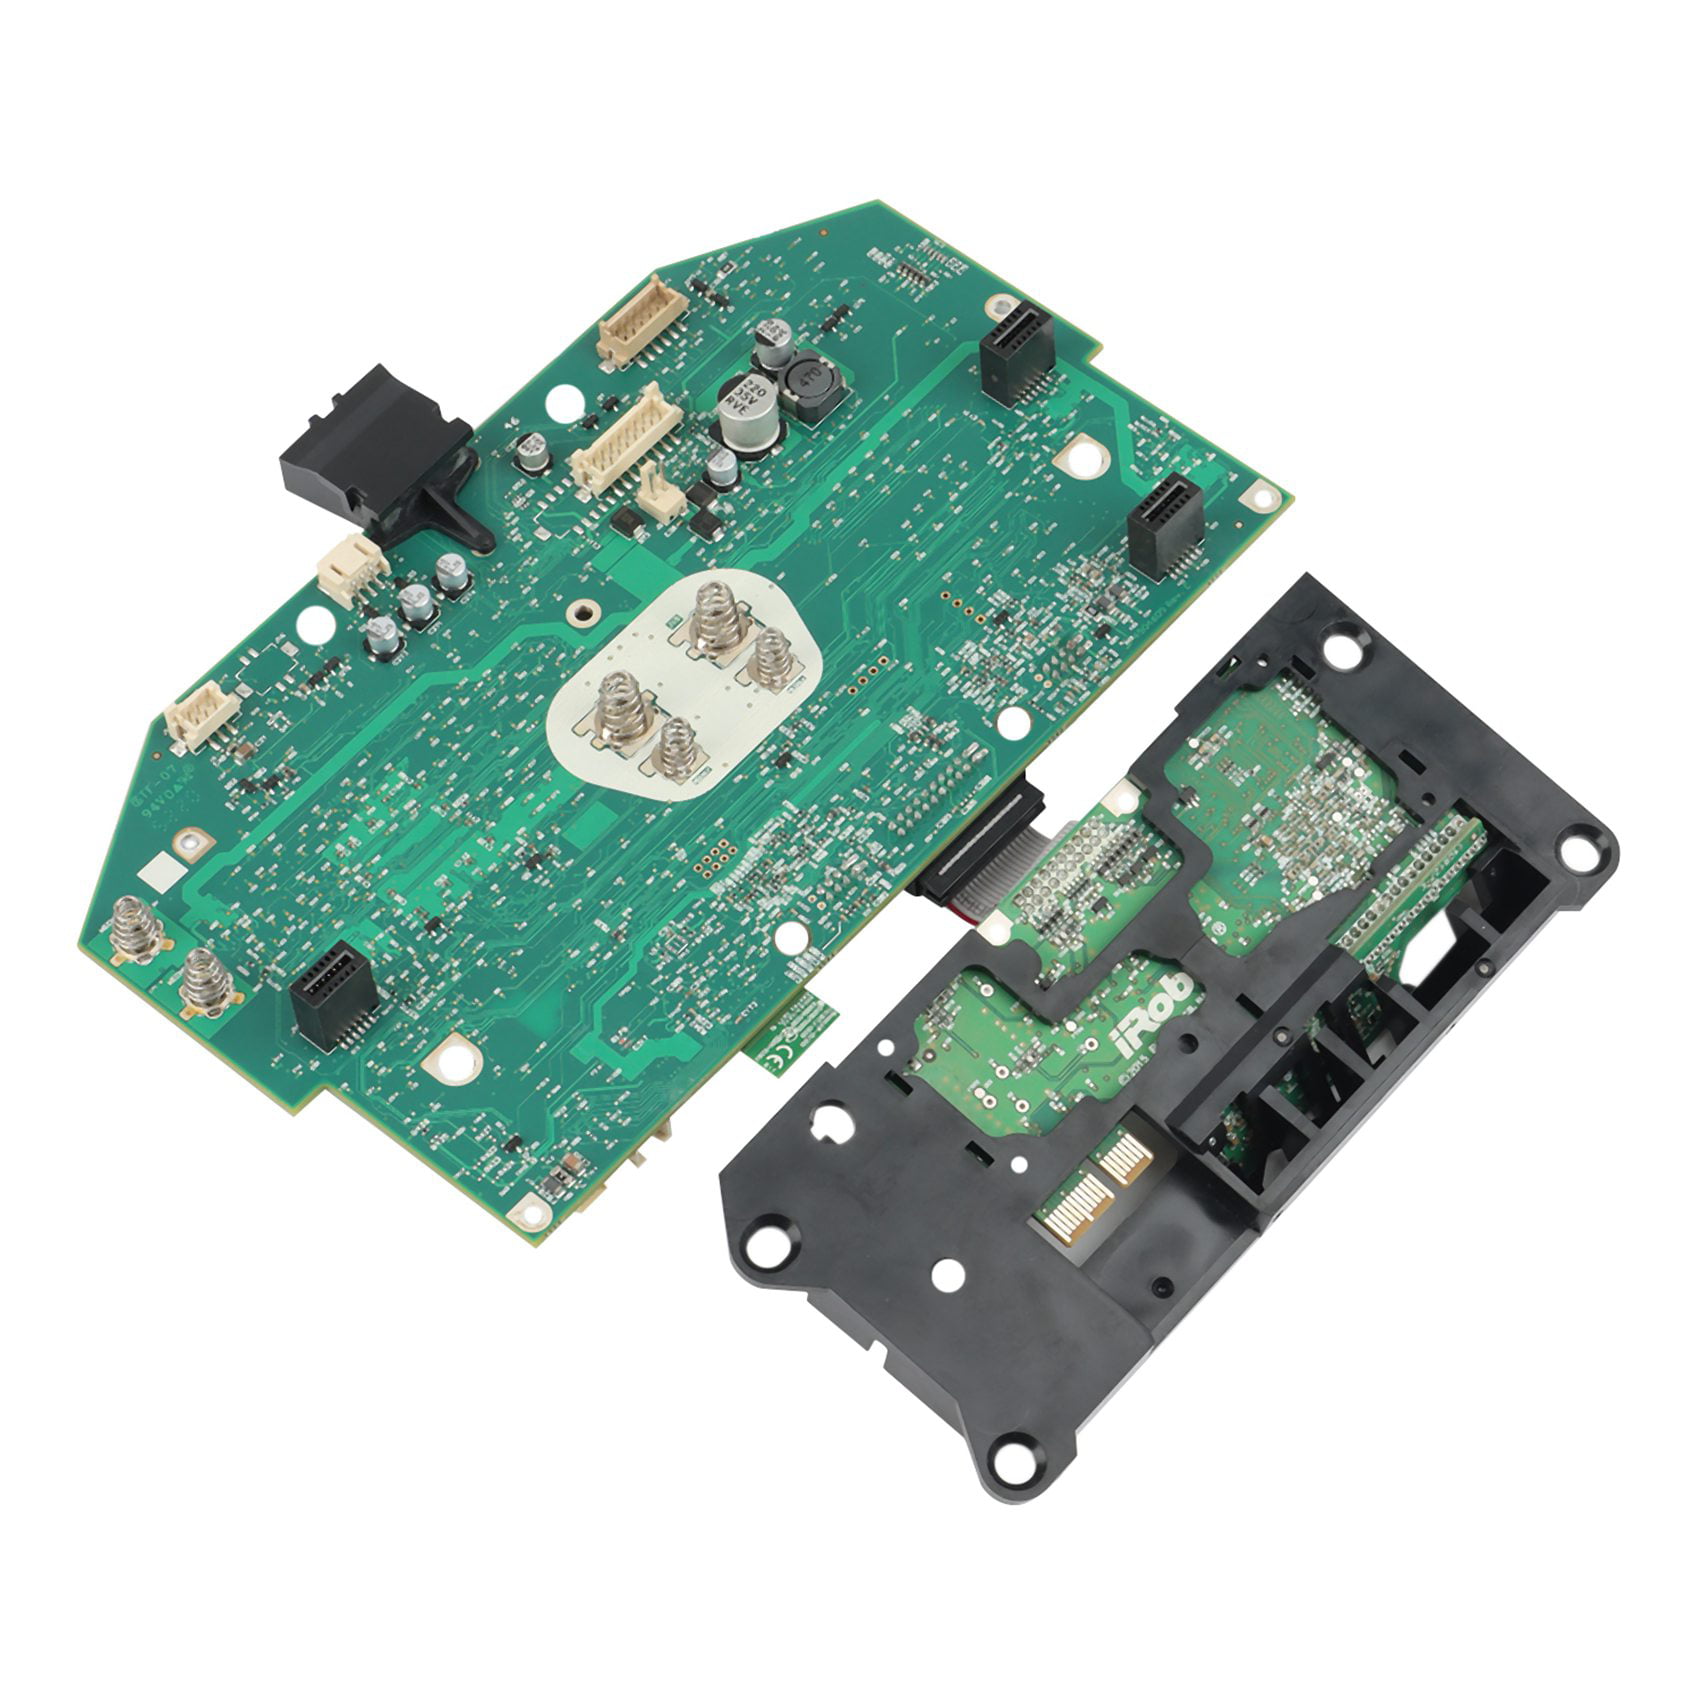 PCB Mainboard Motherboard Circuit Board For iRobot Roomba 500 600 Series Vacuum 